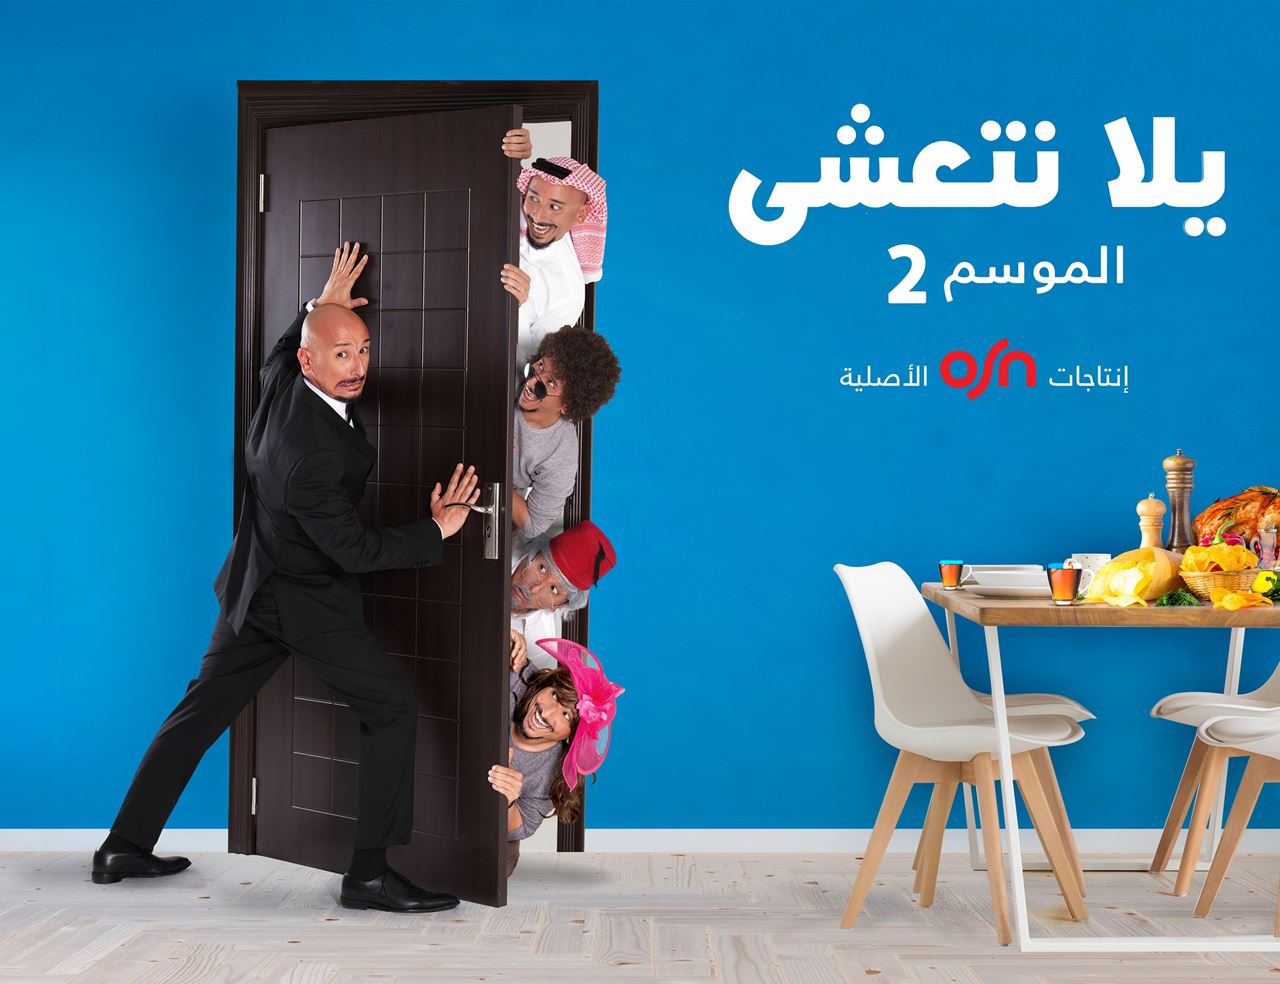 OSN تقدّم نخبة من المسلسلات الدرامية الخليجية والمصرية والعربية وإنتاجات OSN الأصلية خلال رمضان 2021